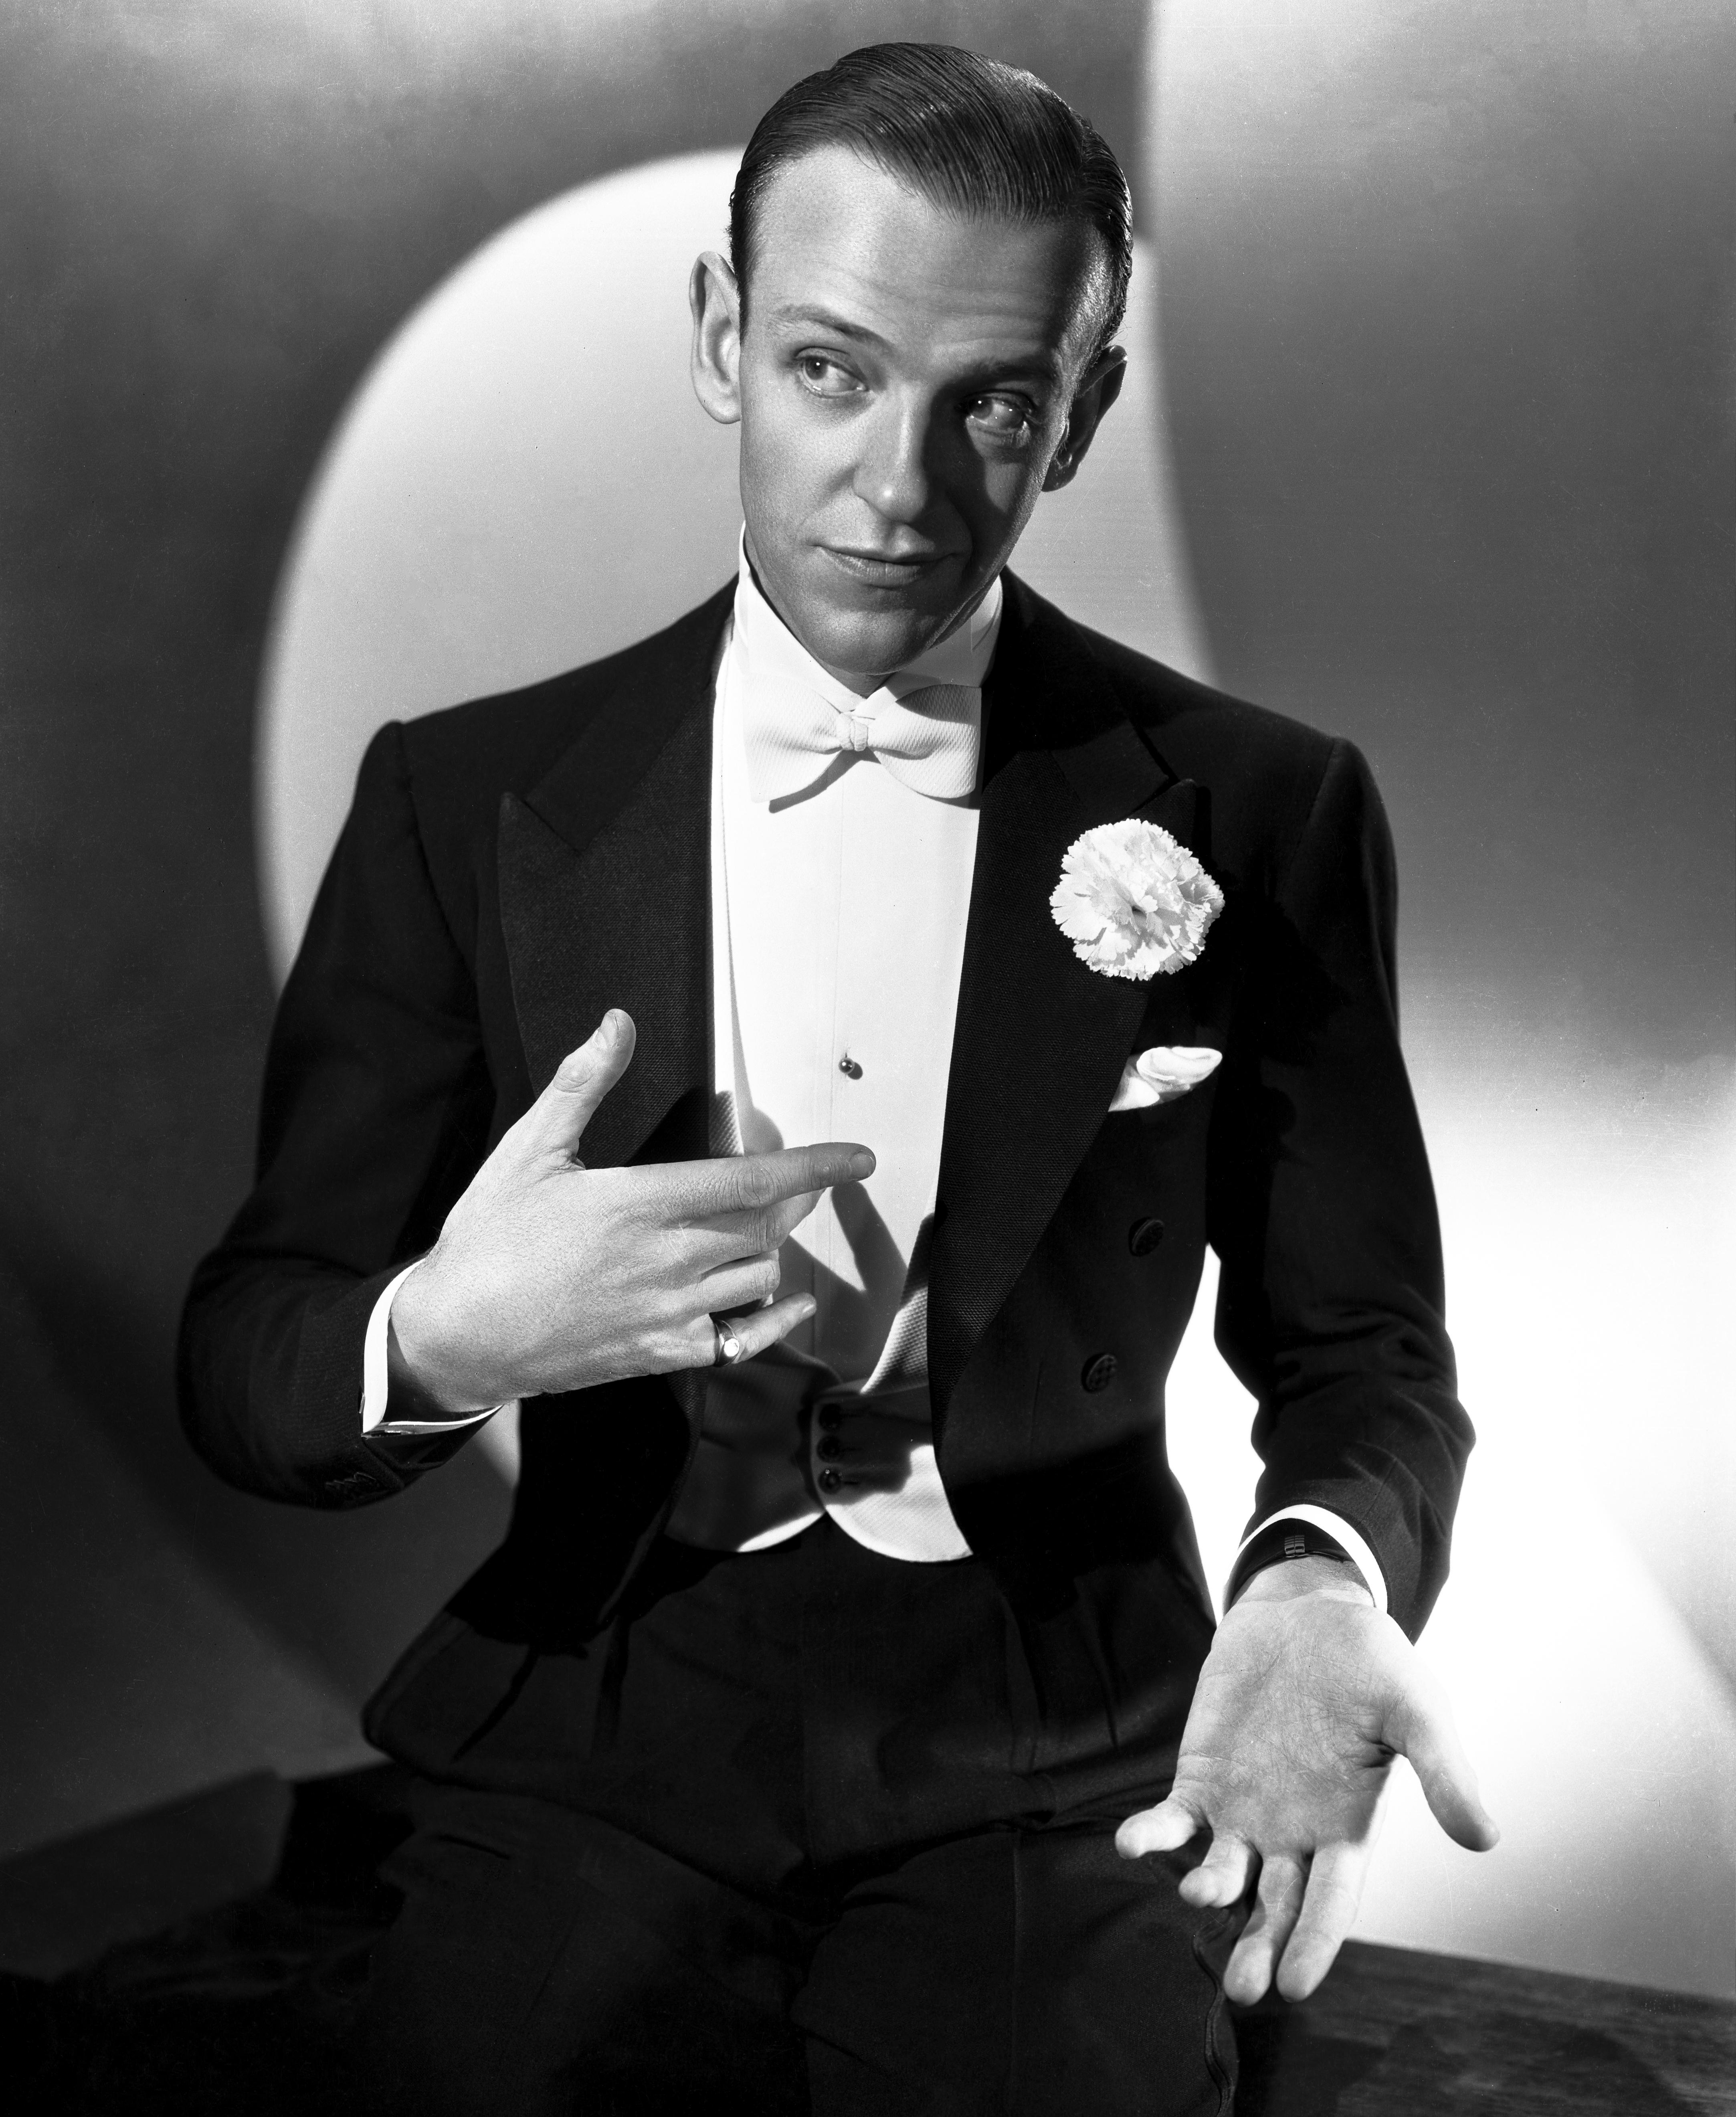 Ernest Bachrach Portrait Photograph - Fred Astaire in Formal Attire Fine Art Print